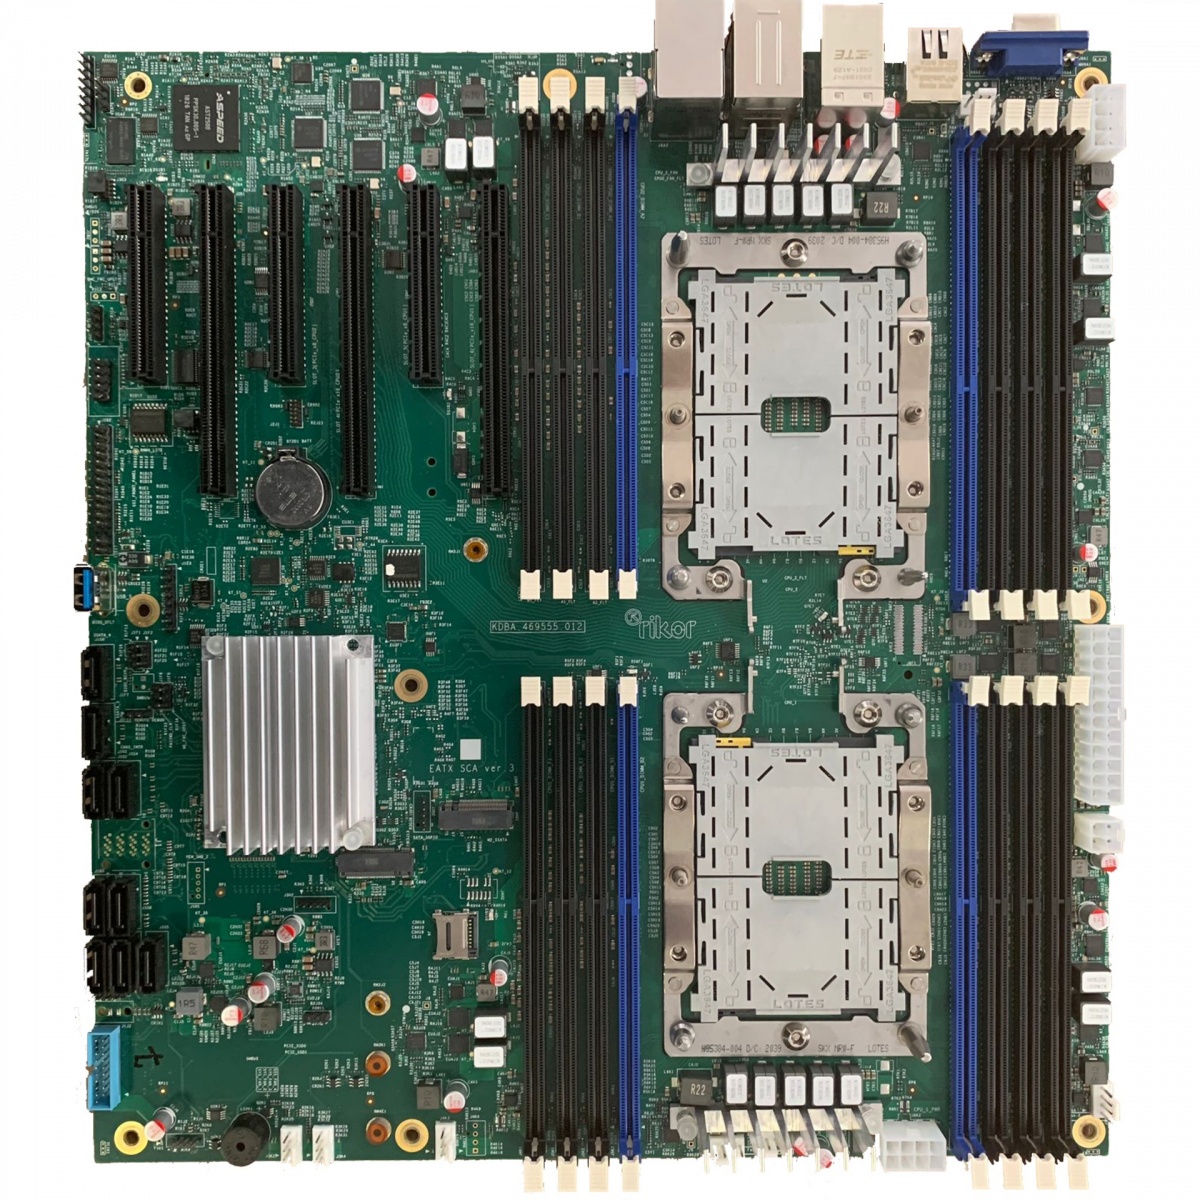 Серверная платформа Rikor 2U RP6208-PB35-800HS, до двух процессоров Intel Xeon Scalable, DDR4, 8x3.5", w/o expander, 2x1000Base-T, резервируемый БП